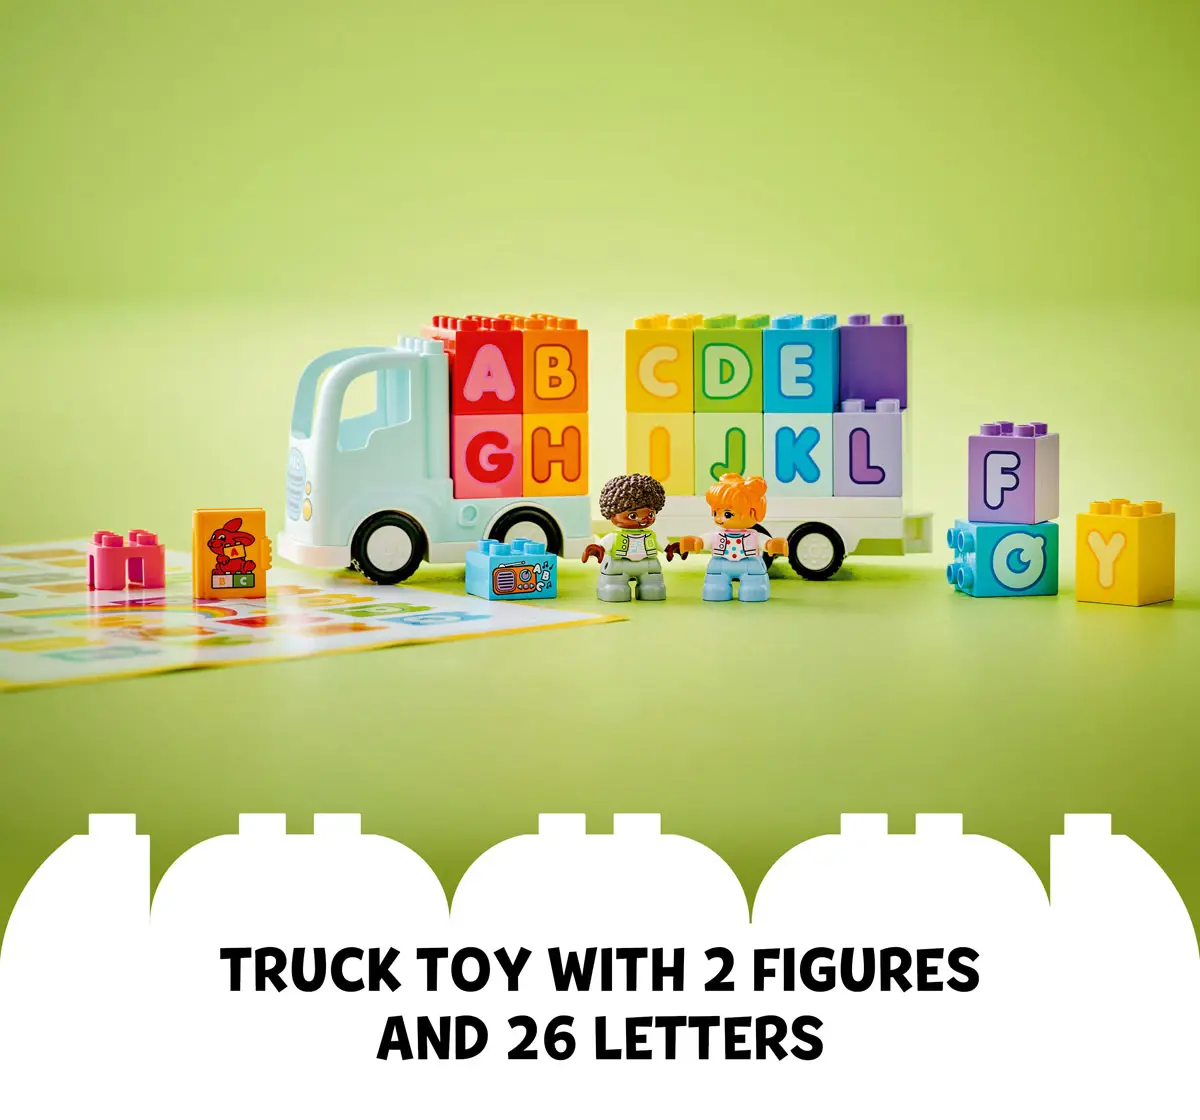 Lego Duplo Town Alphabet Truck Toy 10421 Multicolour For Kids Ages 2Y+ ( 36 Pieces) 